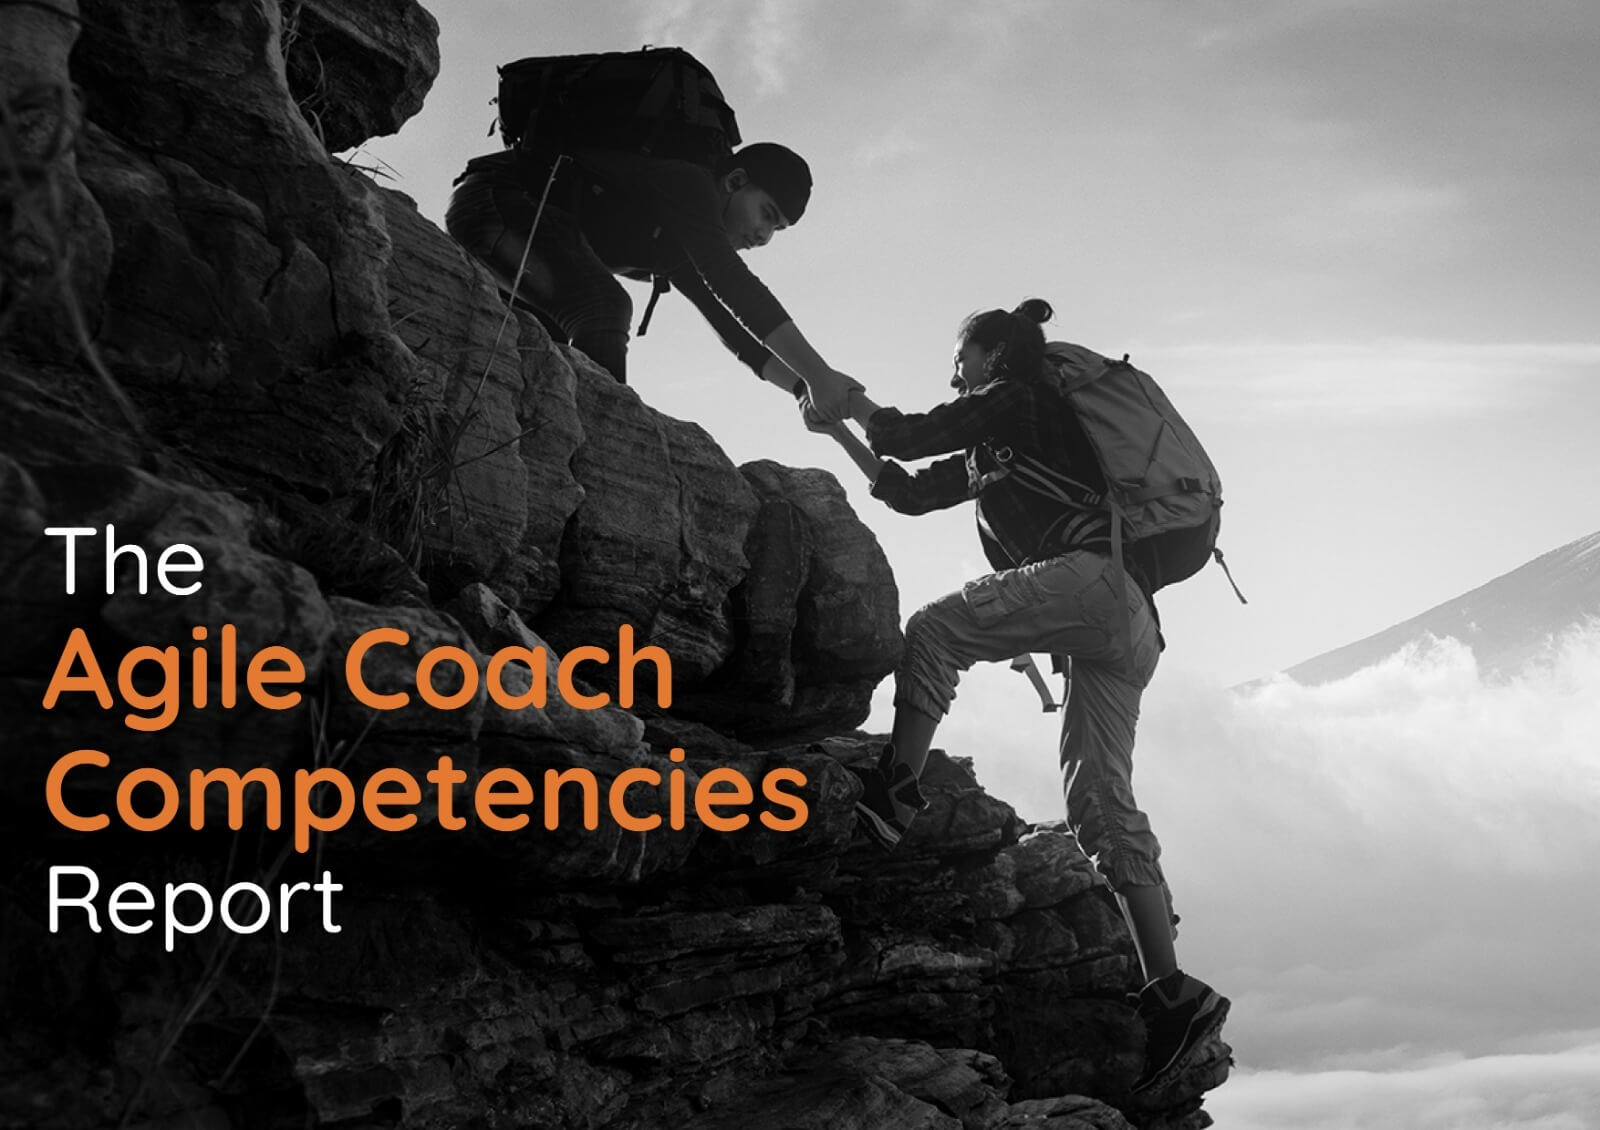 Agile Coach Competencies Report